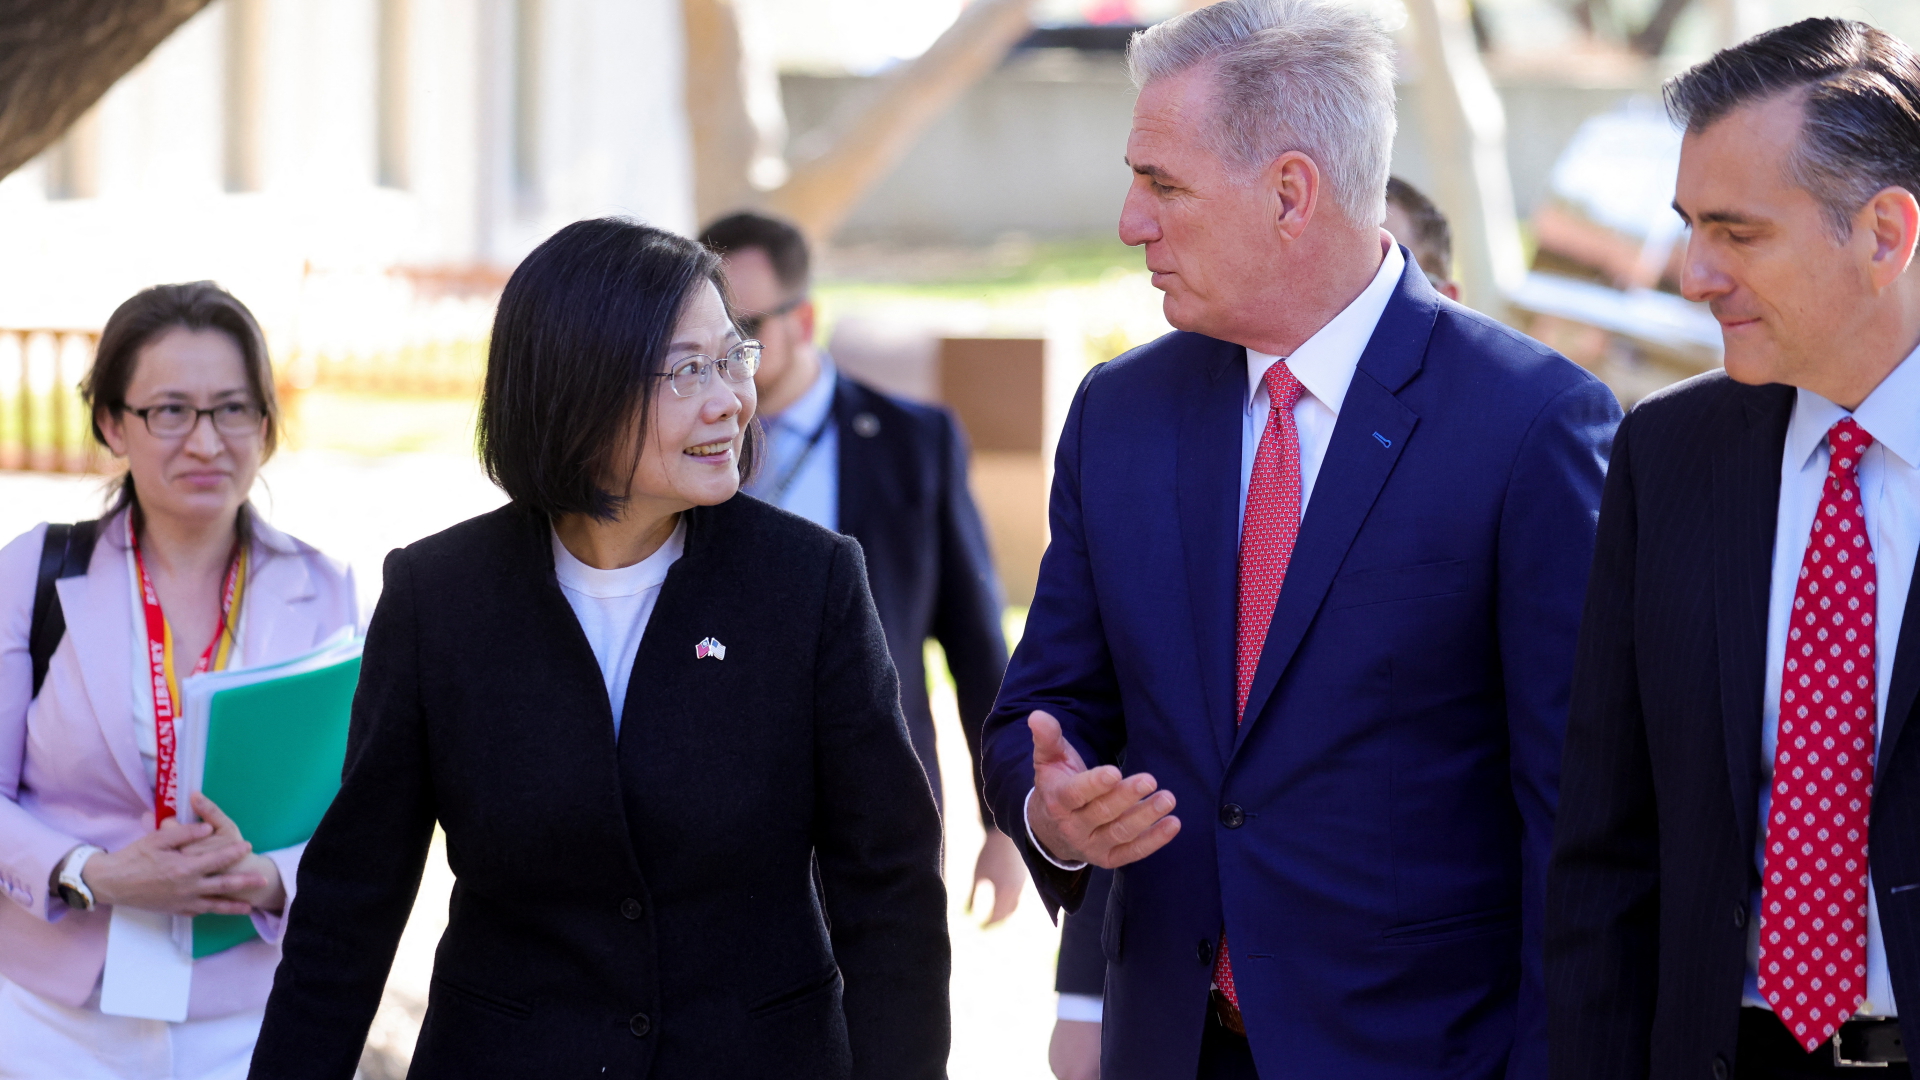 USA flight despite China’s warnings: Taiwan’s president in California